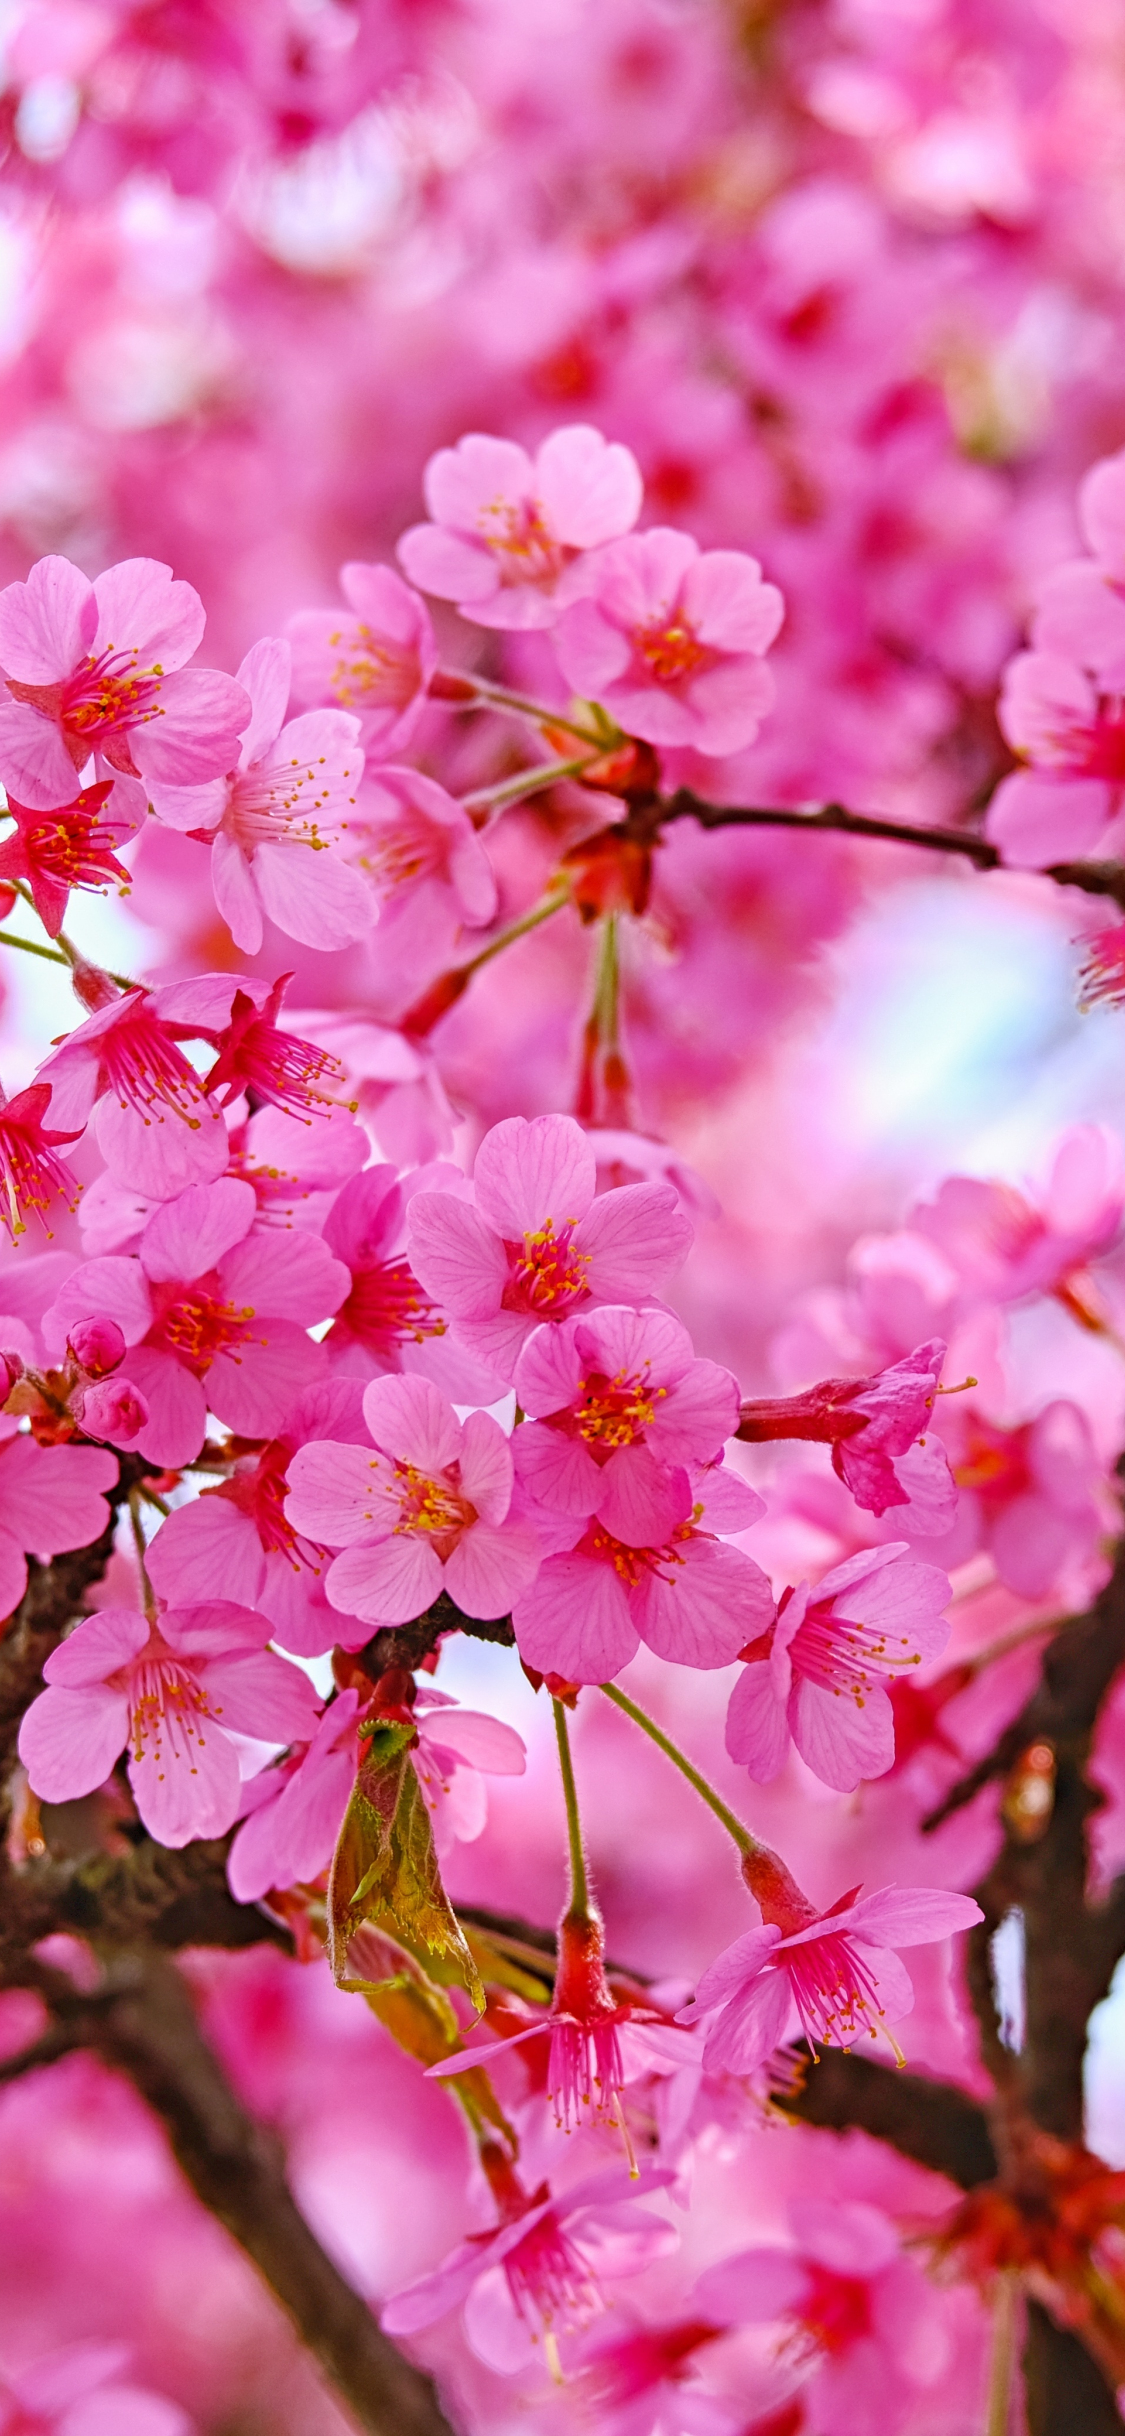 Cherry blossom, pink flowers, nature, 1125x2436 wallpaper